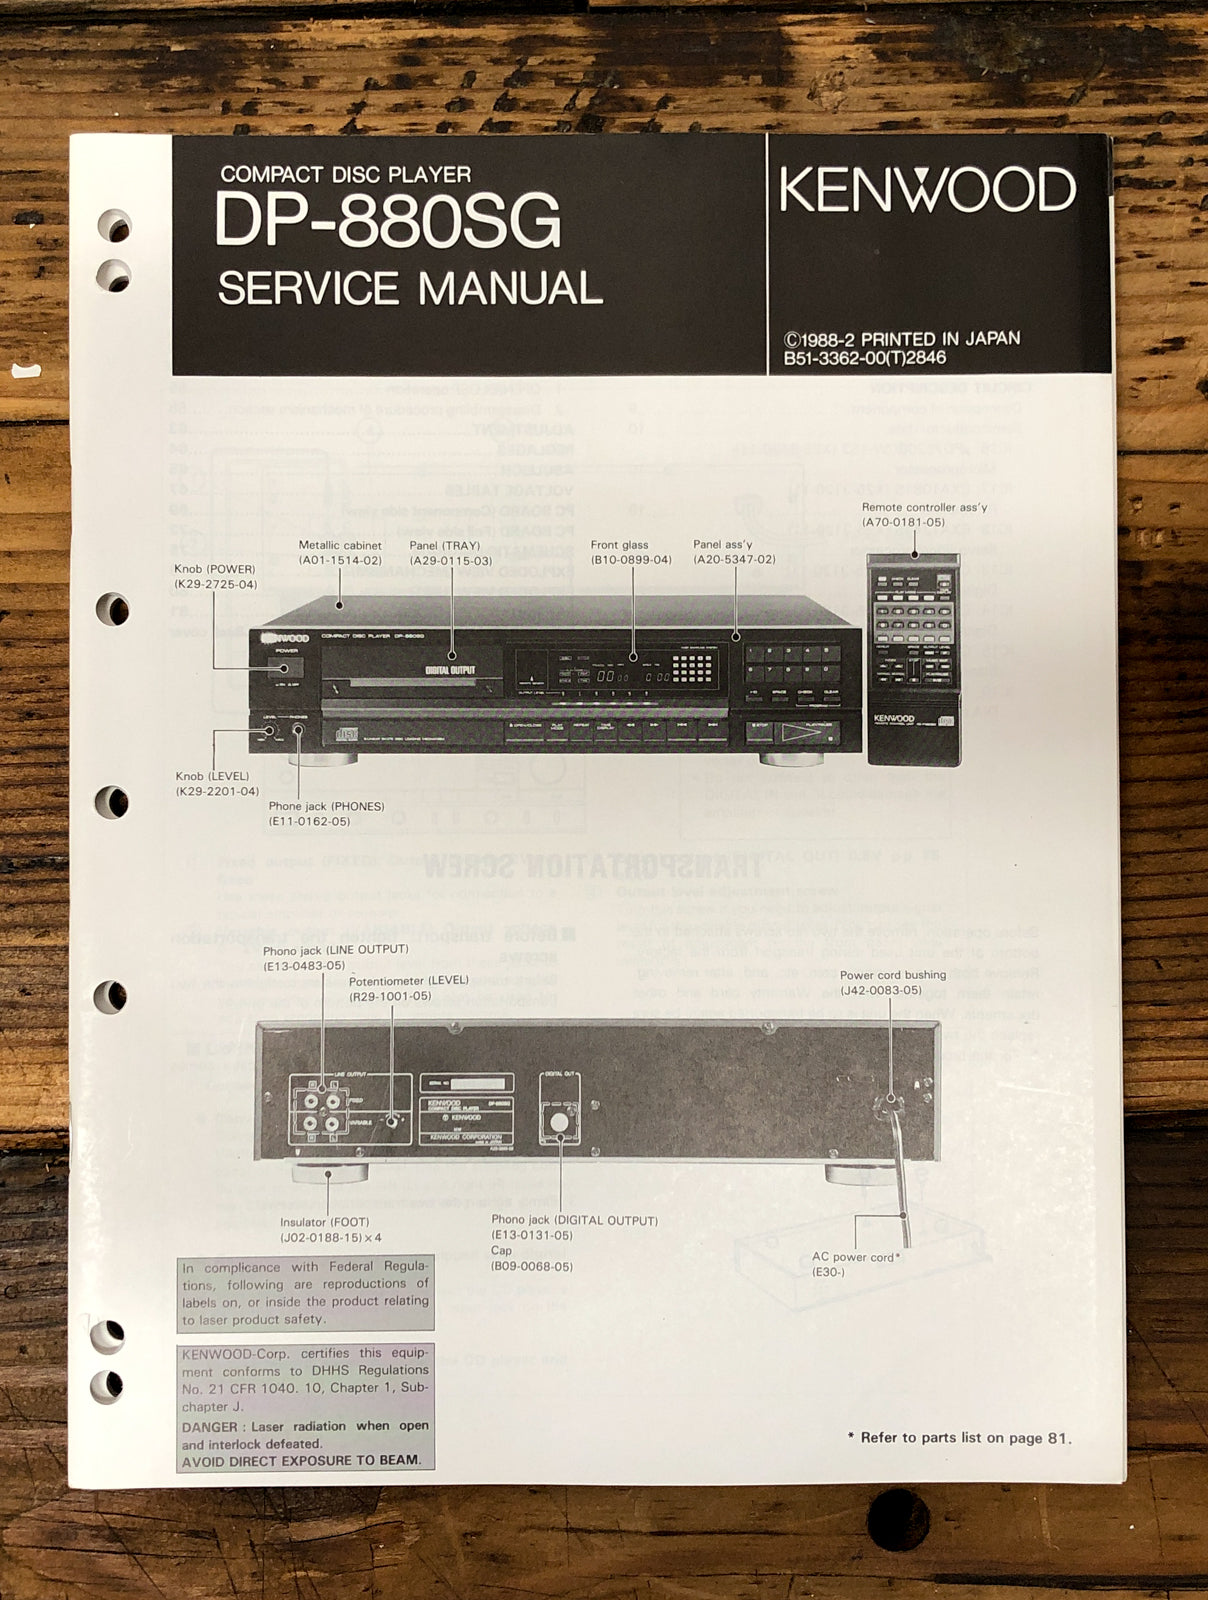 Kenwood DP-880SG CD Player  Service Manual *Original*